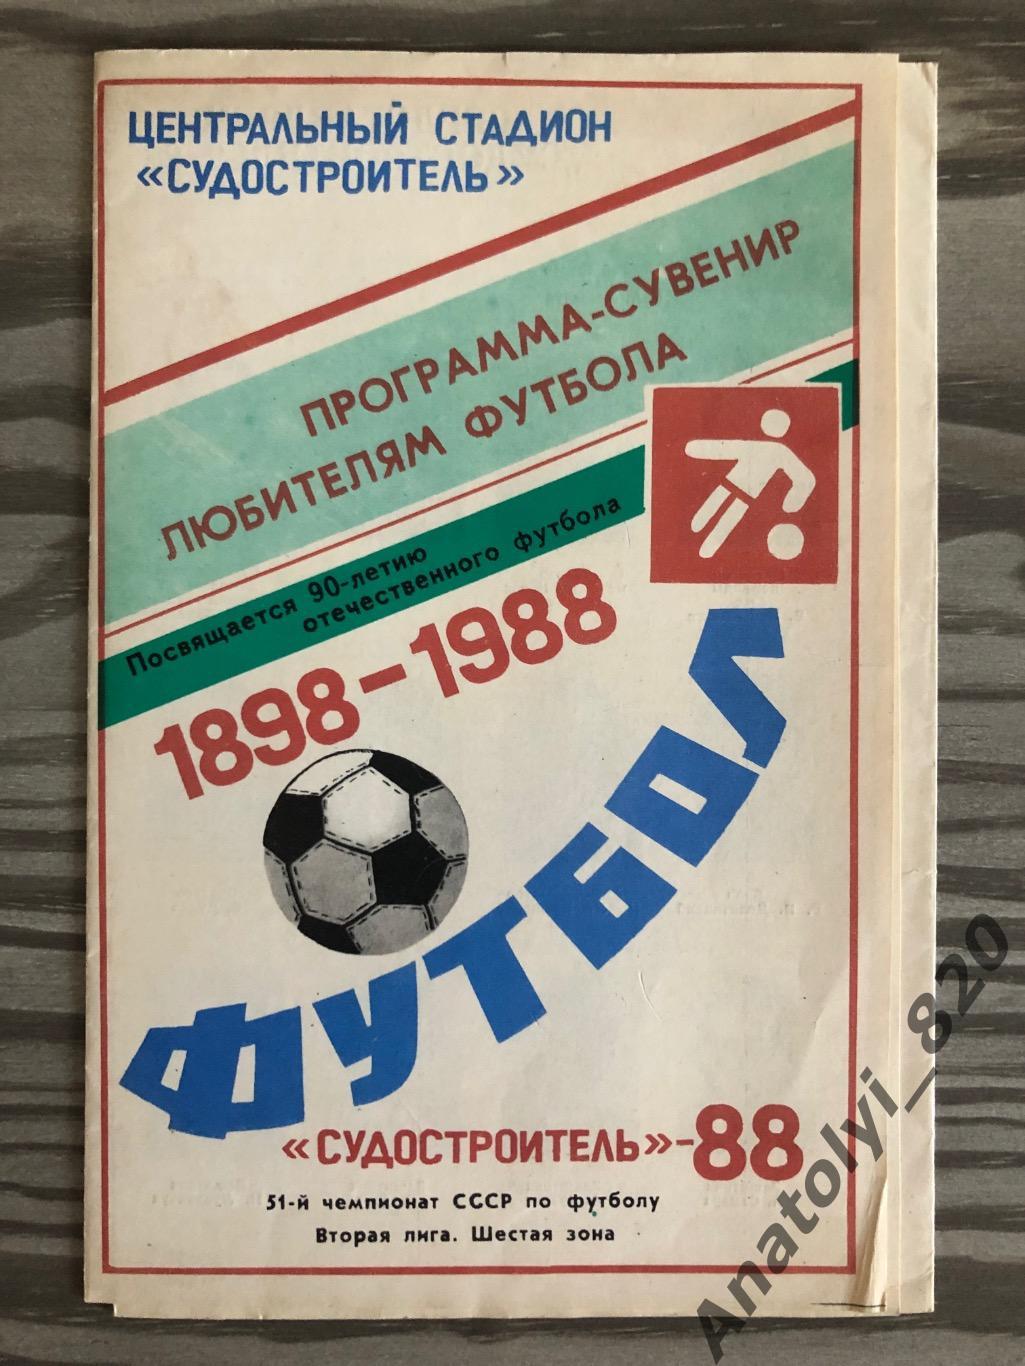 Судостроитель Николаев, программа сувенир 1988 год